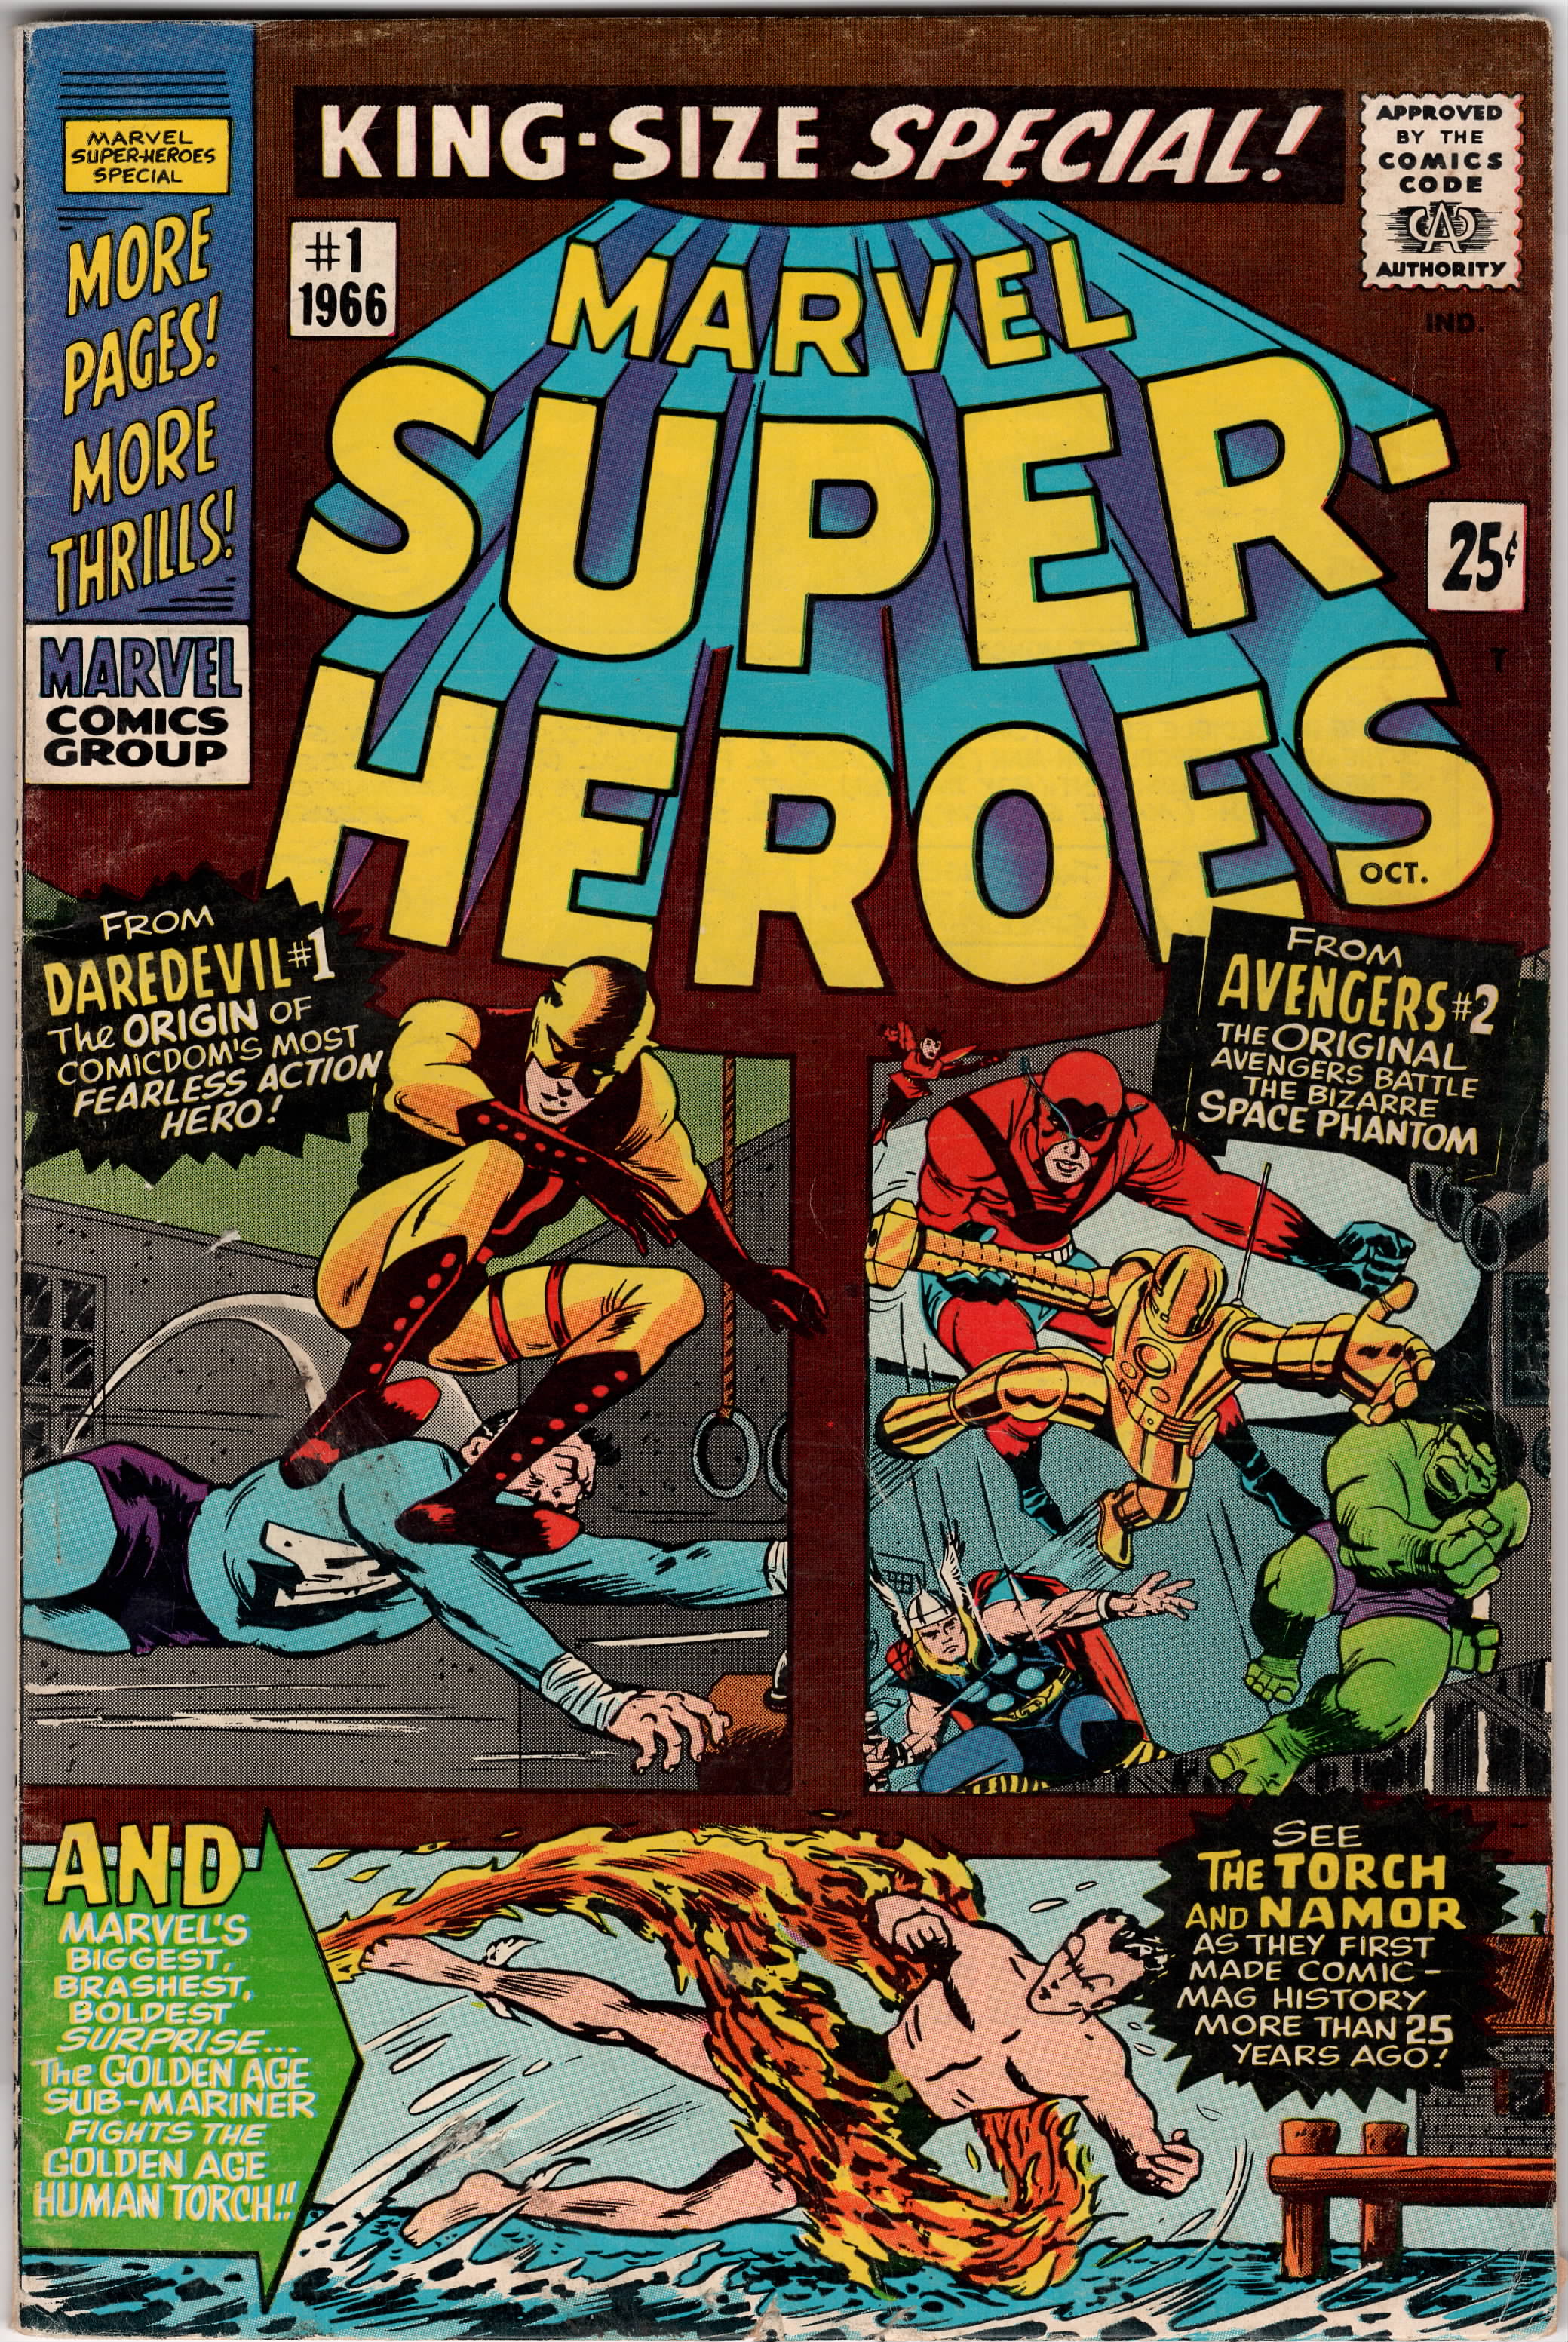 Marvel Super-Heroes #1 (1966)